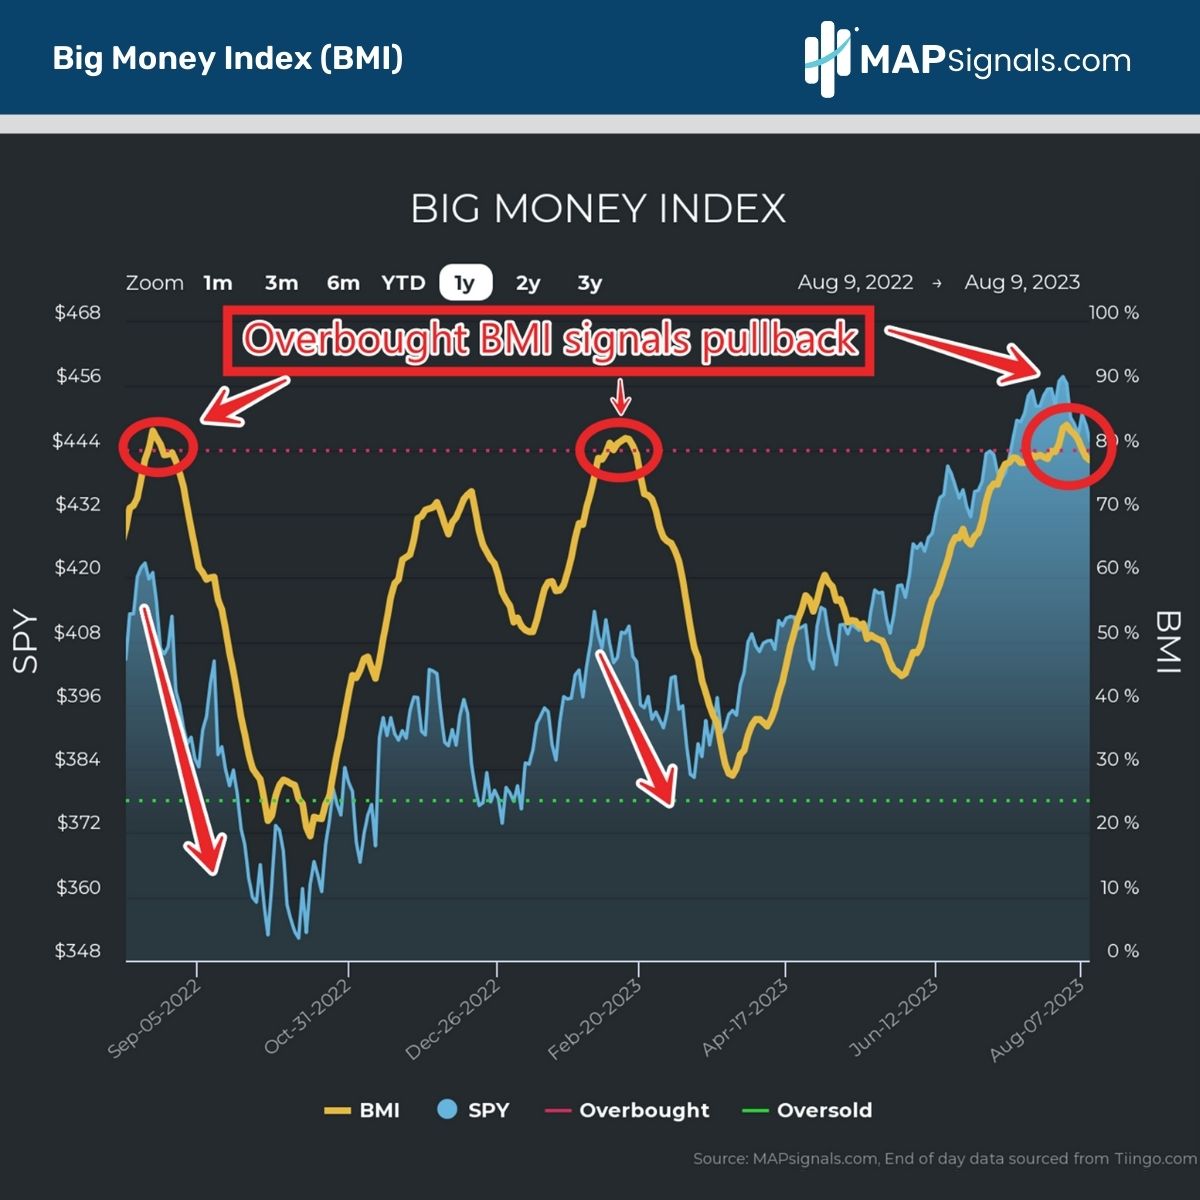 Overbought Big Money Index (BMI) signals pullback | MAPsignals